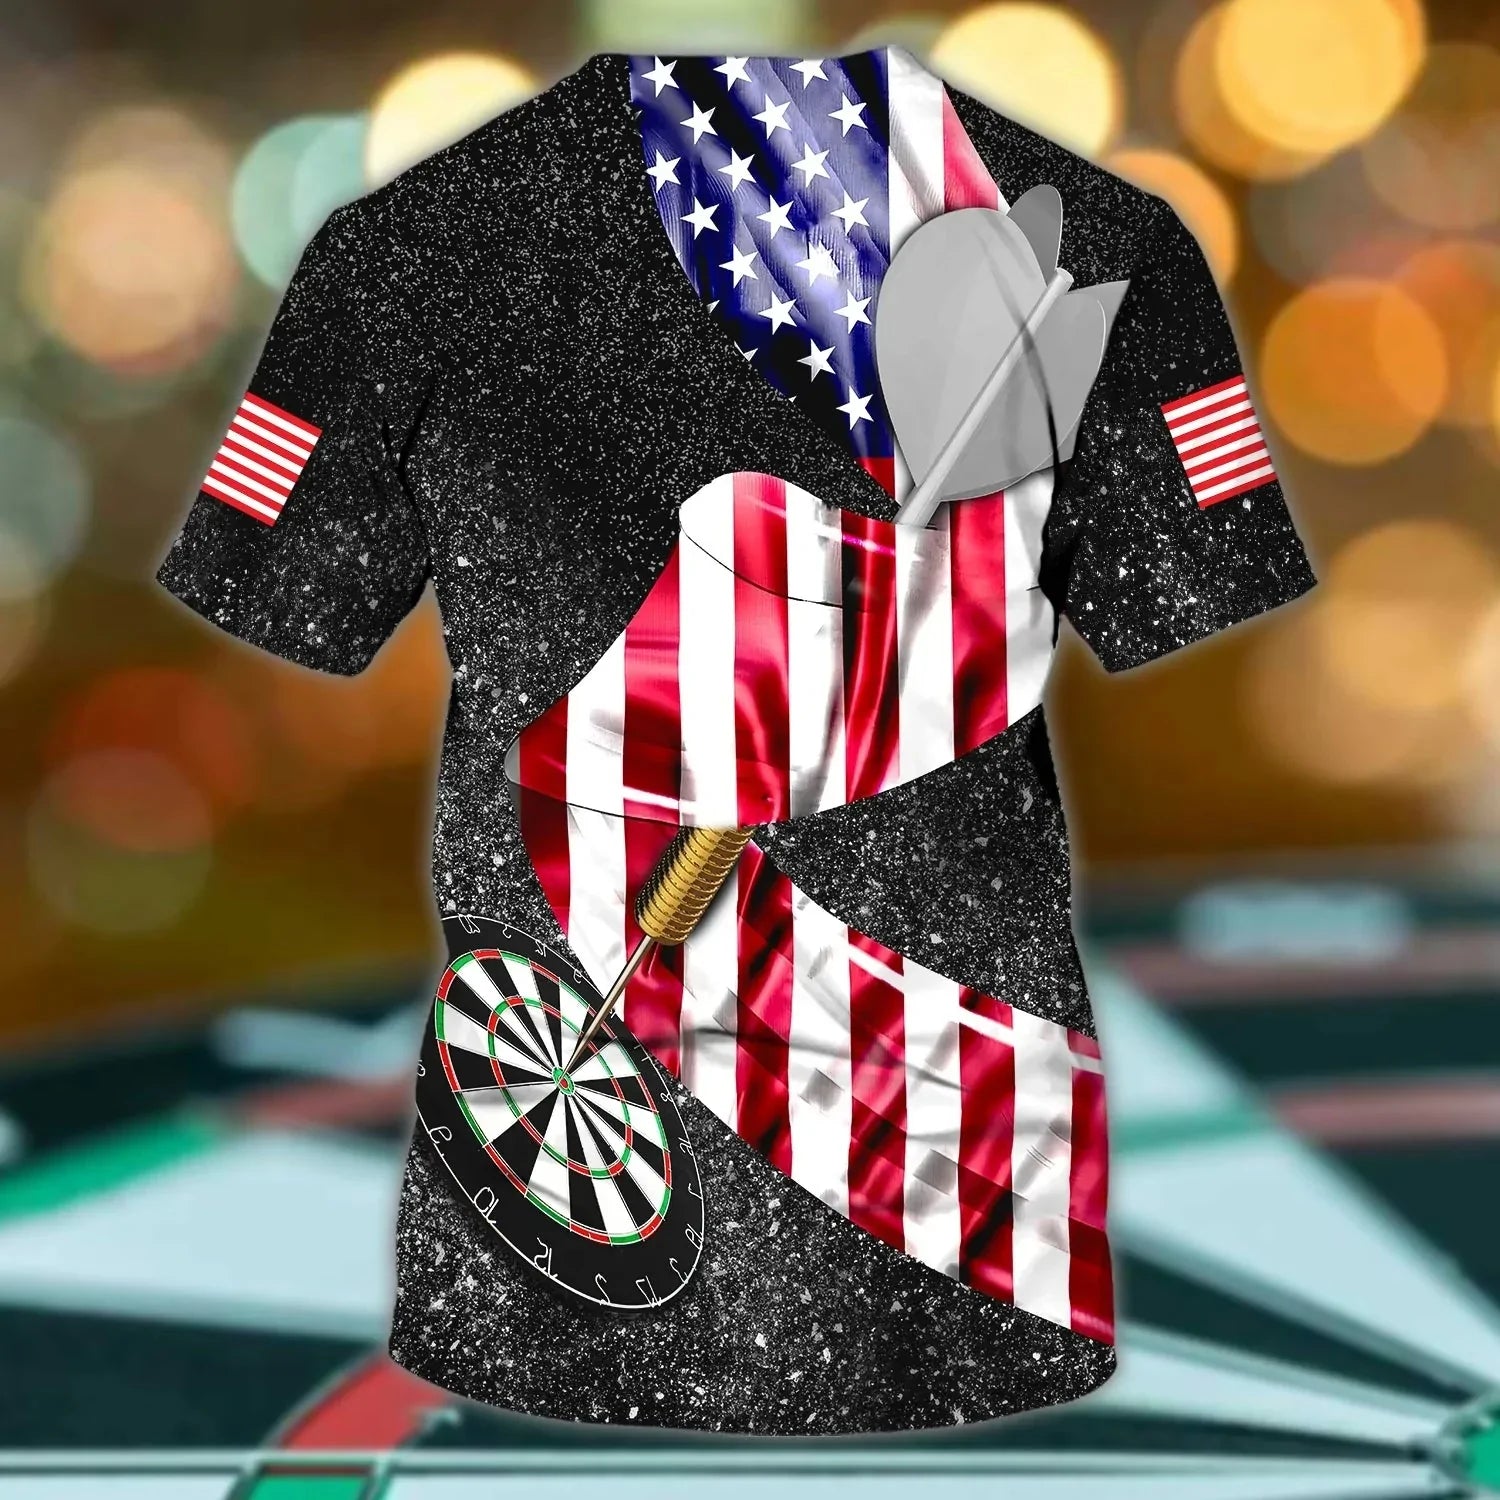 personalized us dart player shirt american flag pattern dart shirt team uniform dt089 fddfd